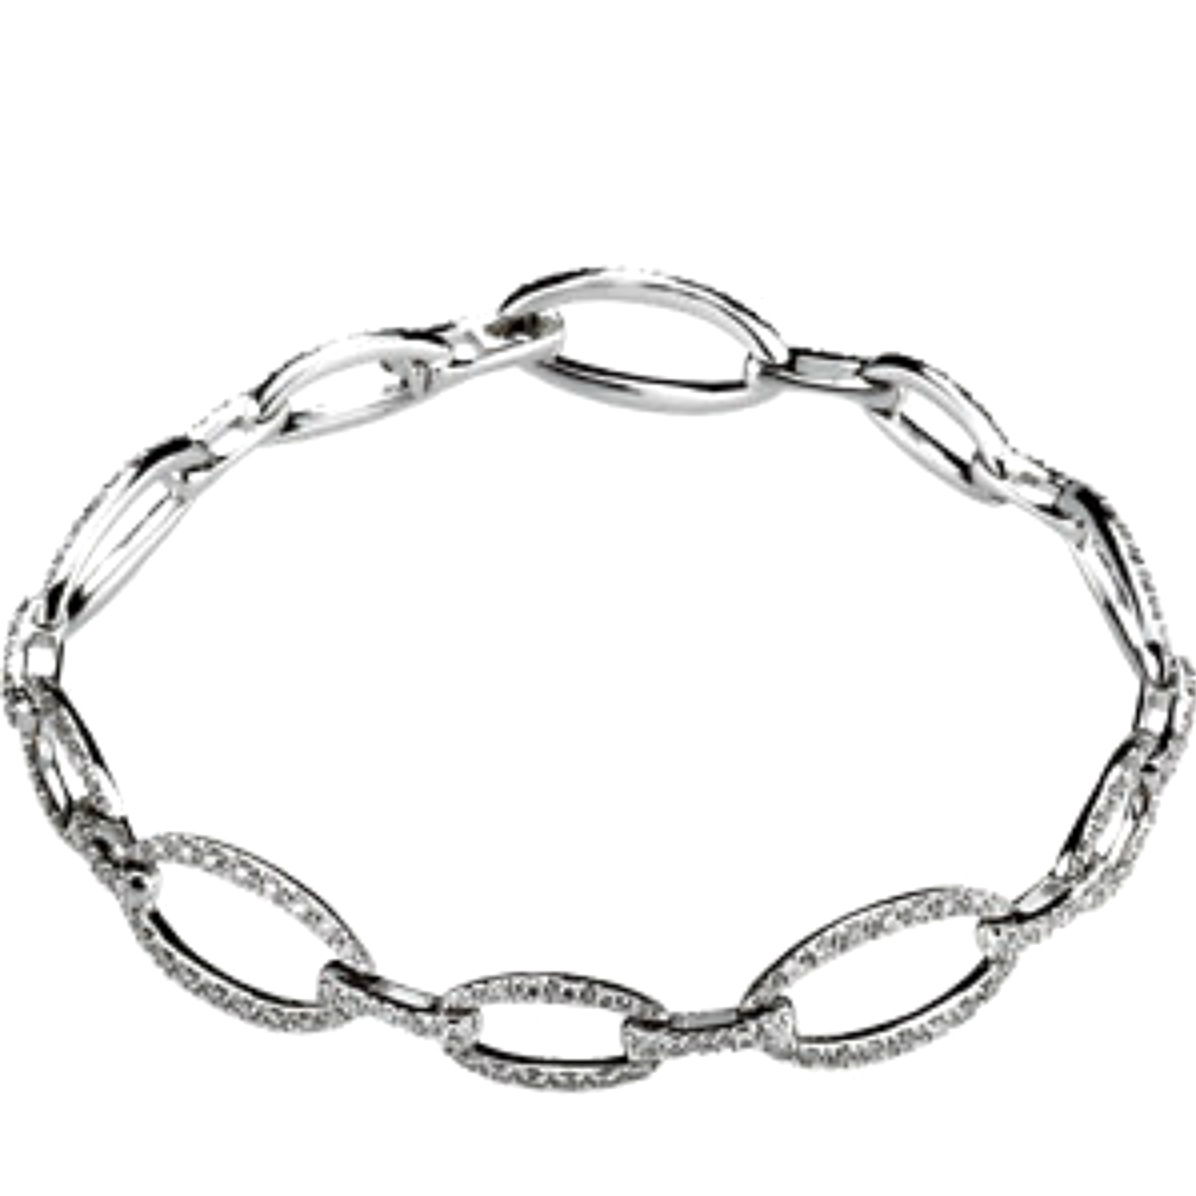 Fashion 1 1/3 CTW Diamond Link Bracelet, 14k White Gold, 7.5"